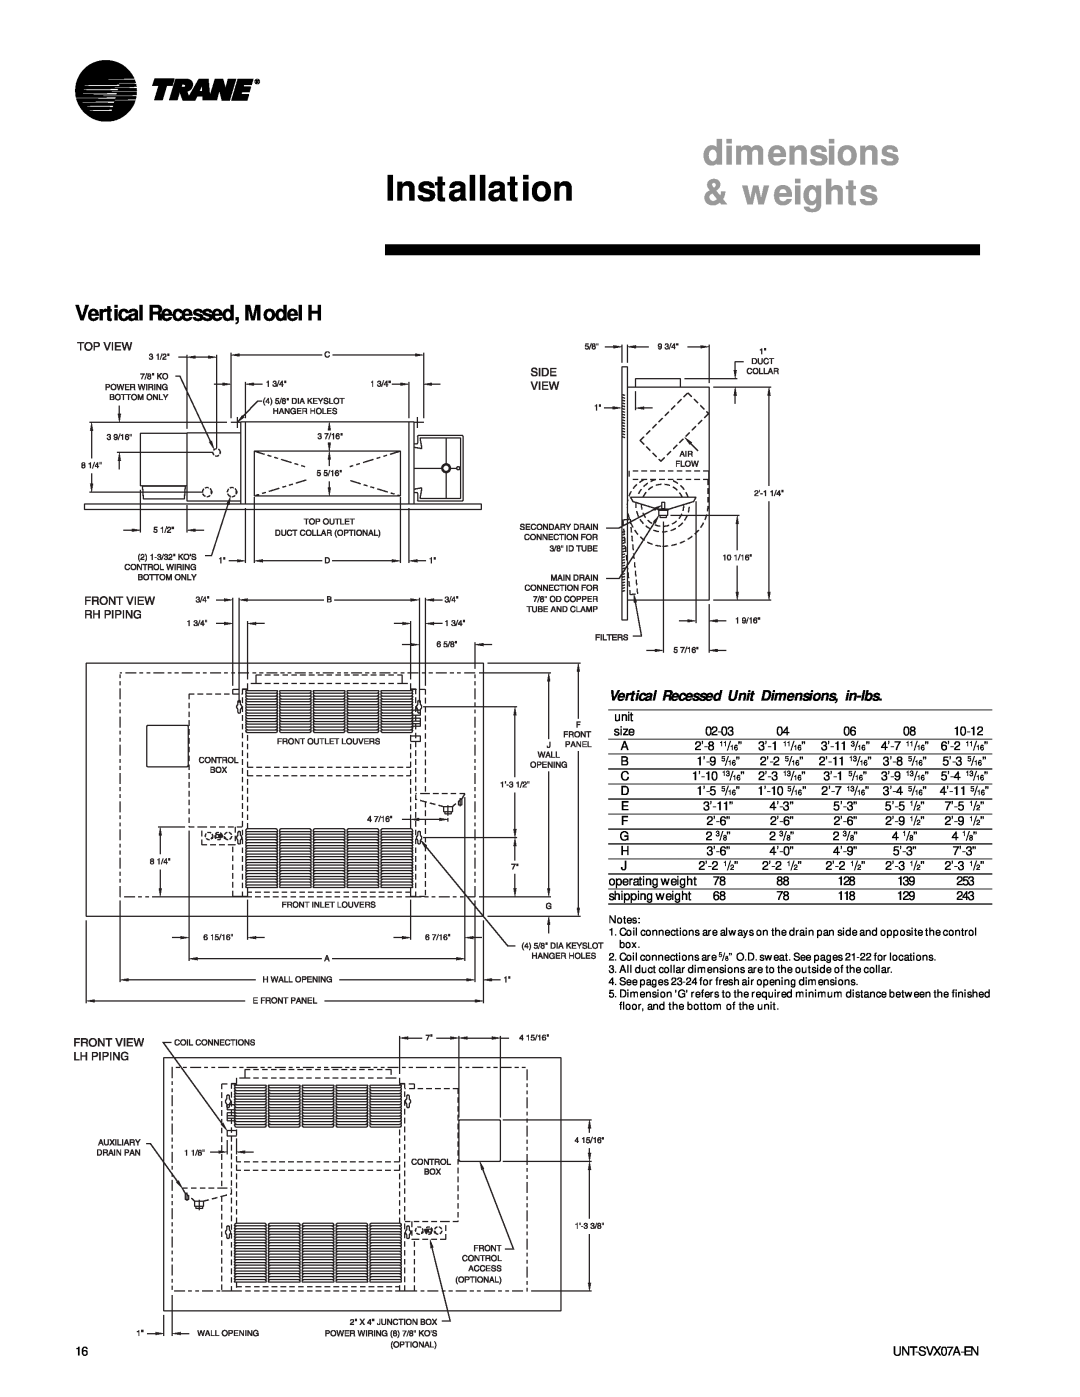 Trane UNT-SVX07A-EN manual Vertical Recessed, Model H, Installation, dimensions, weights 